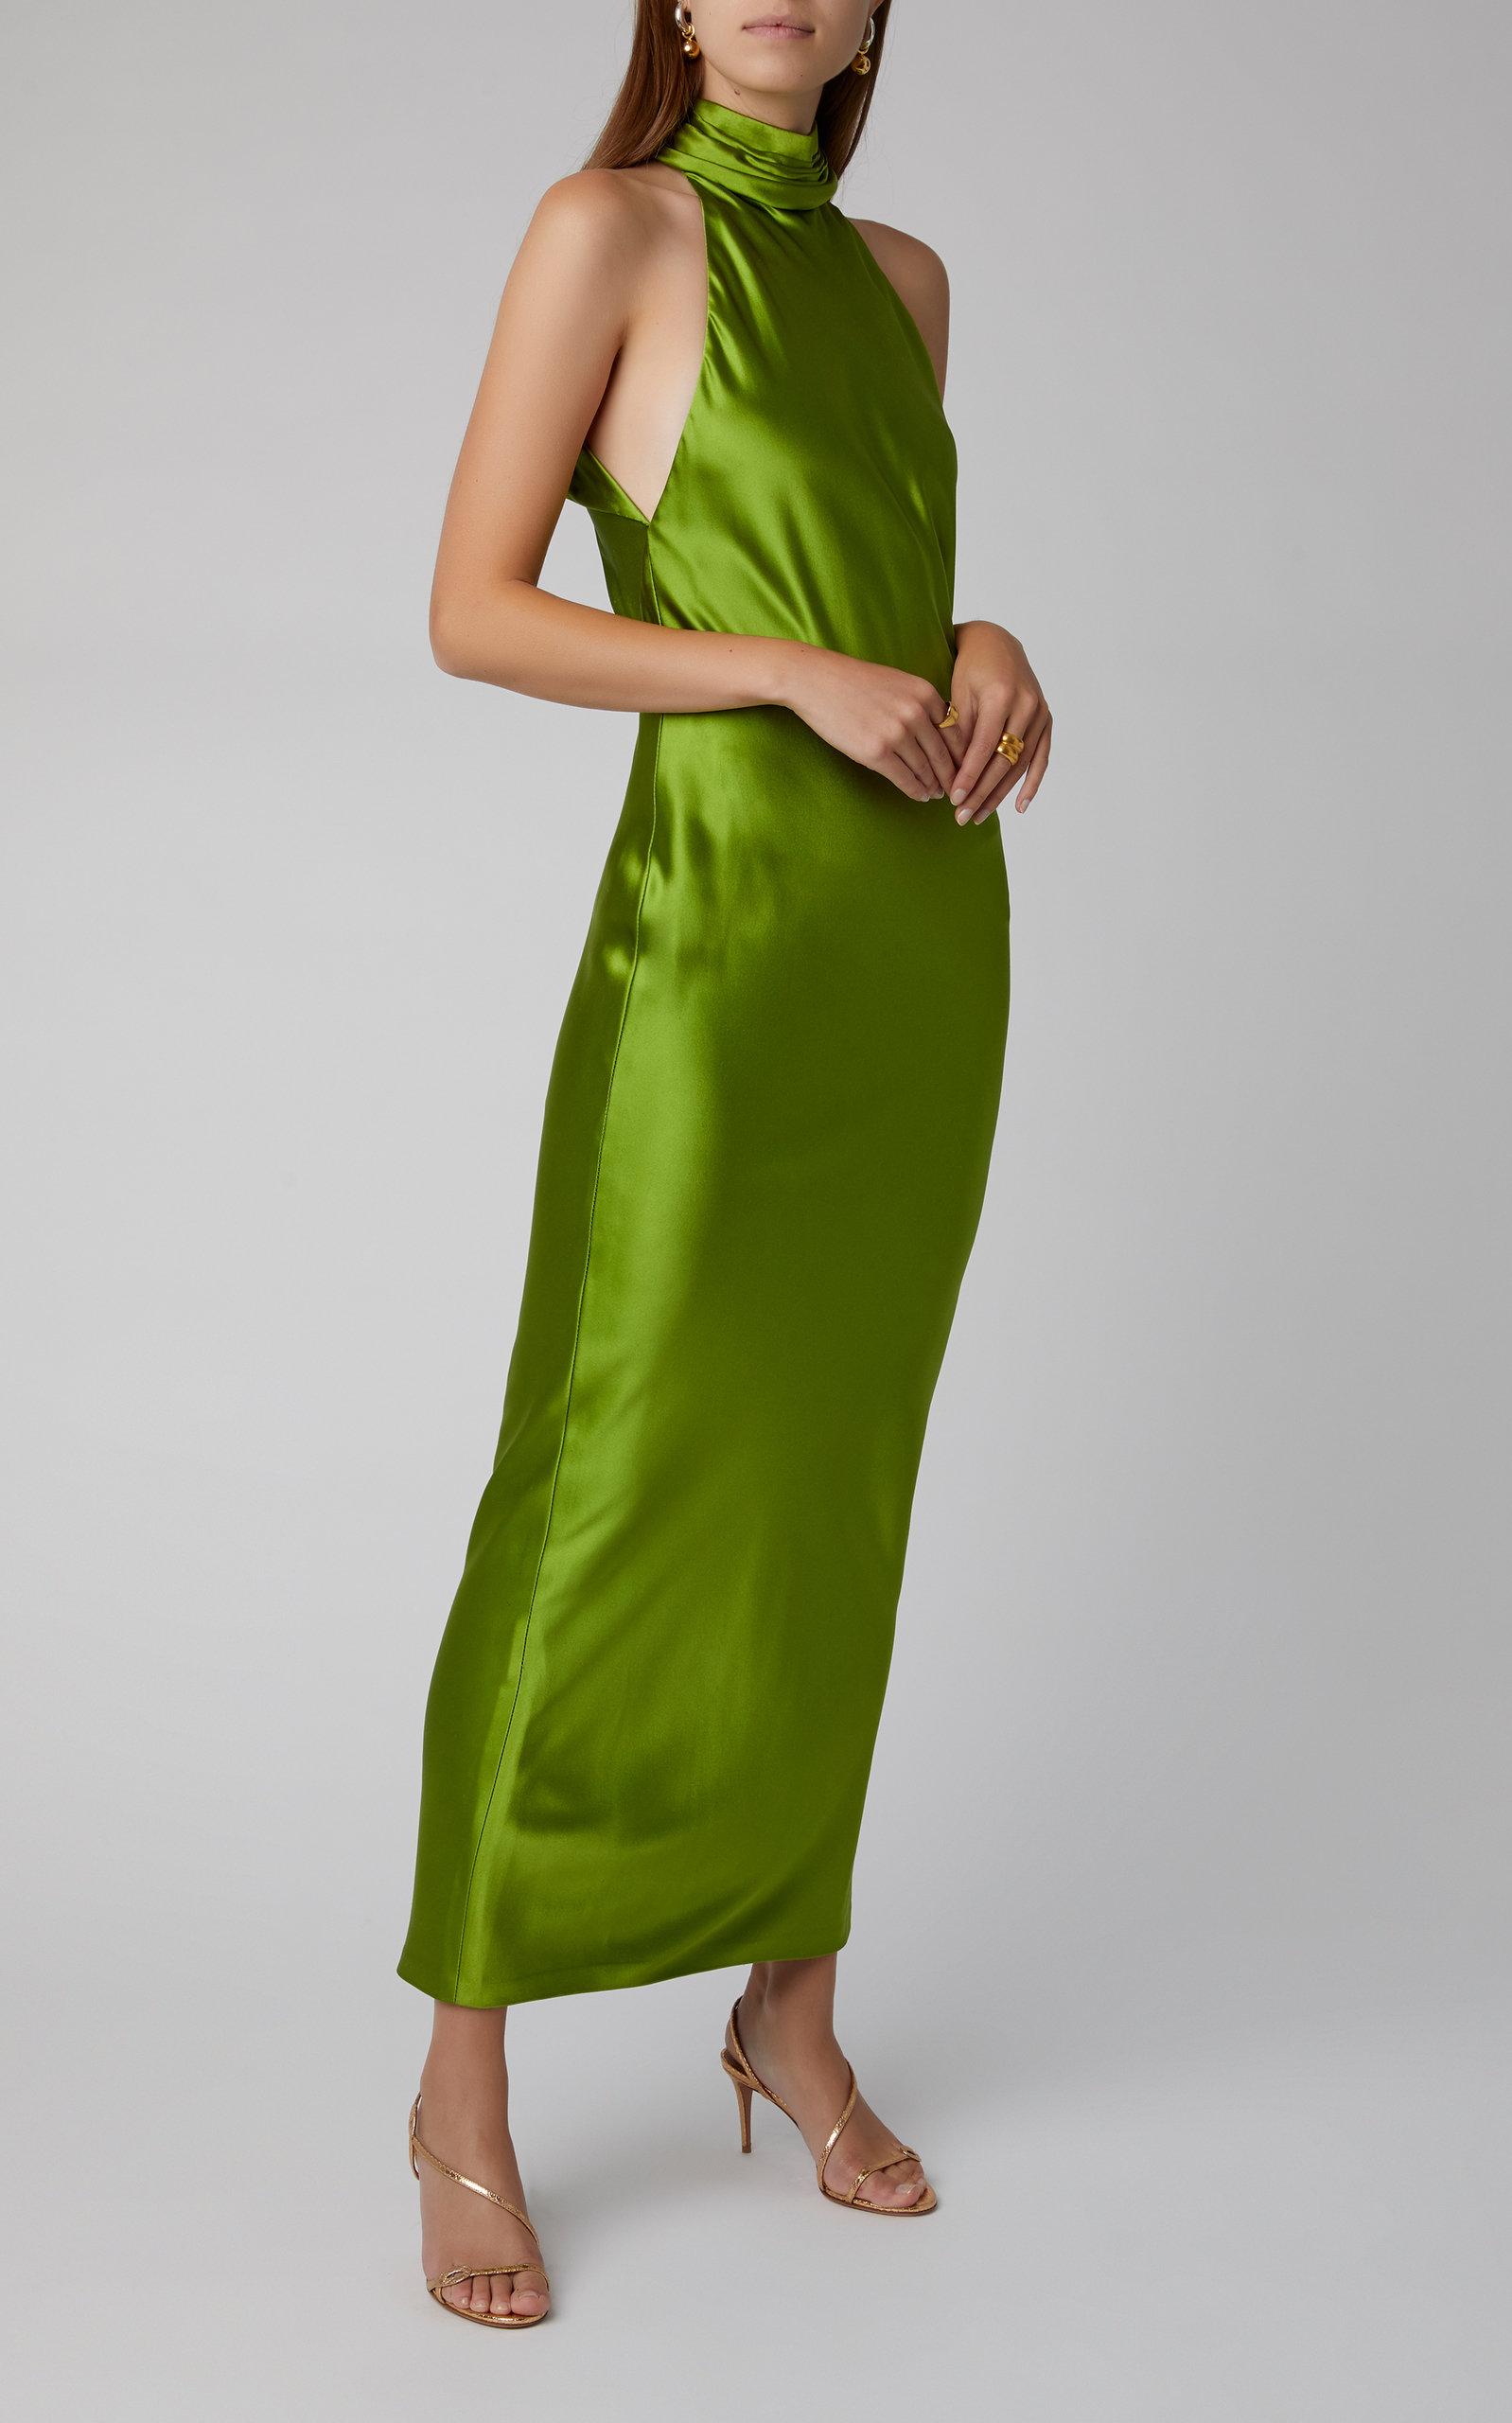 https://cdna.lystit.com/photos/modaoperandi/e7eff2a8/brandon-maxwell-green-Silk-satin-Halterneck-Gown.jpeg